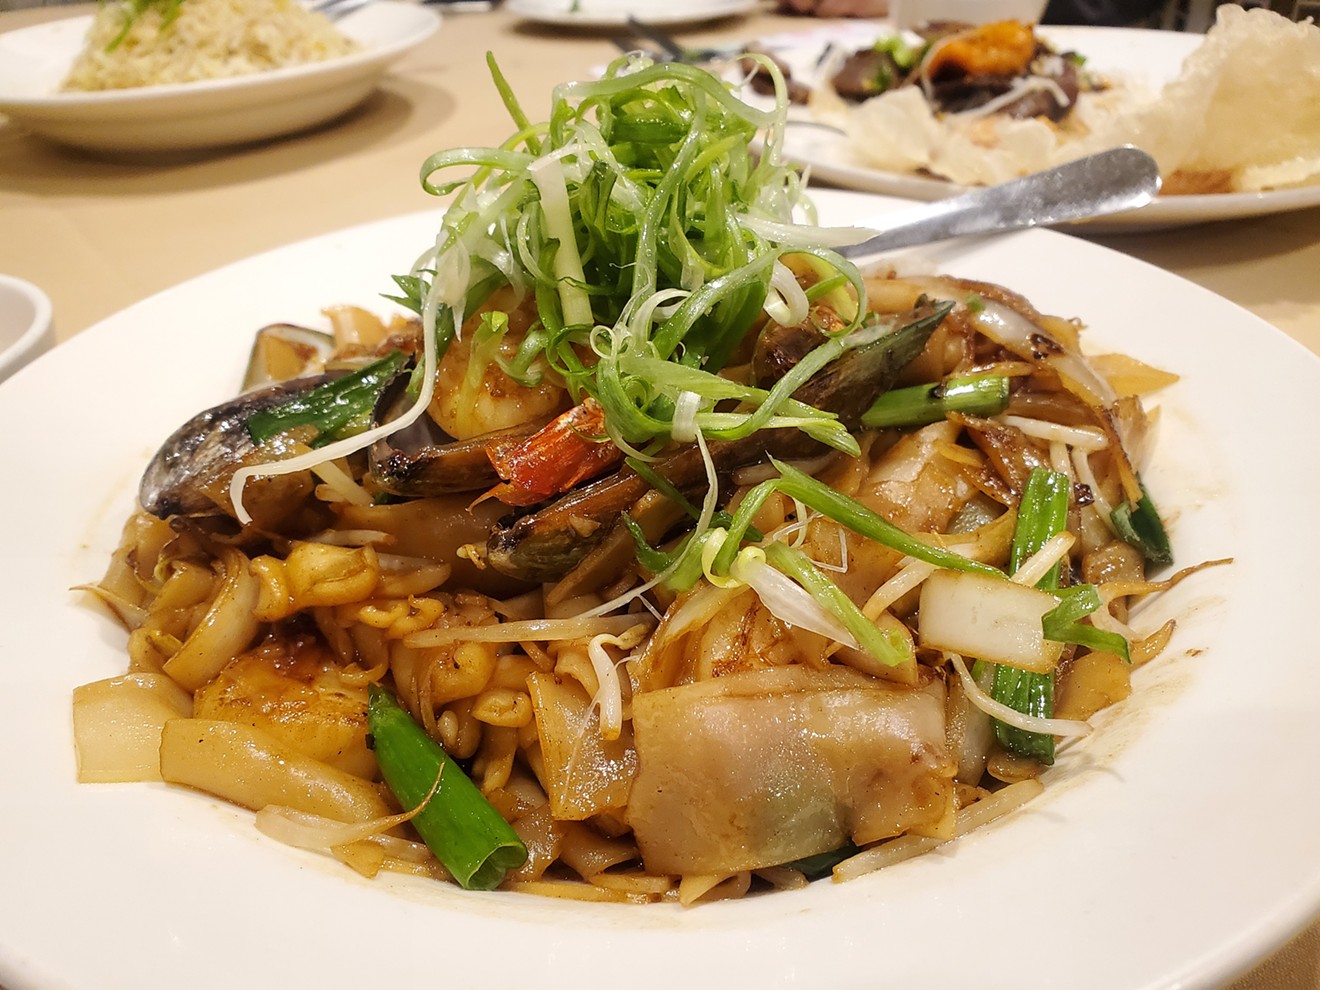 Dry hu tieu noodles with seafood.